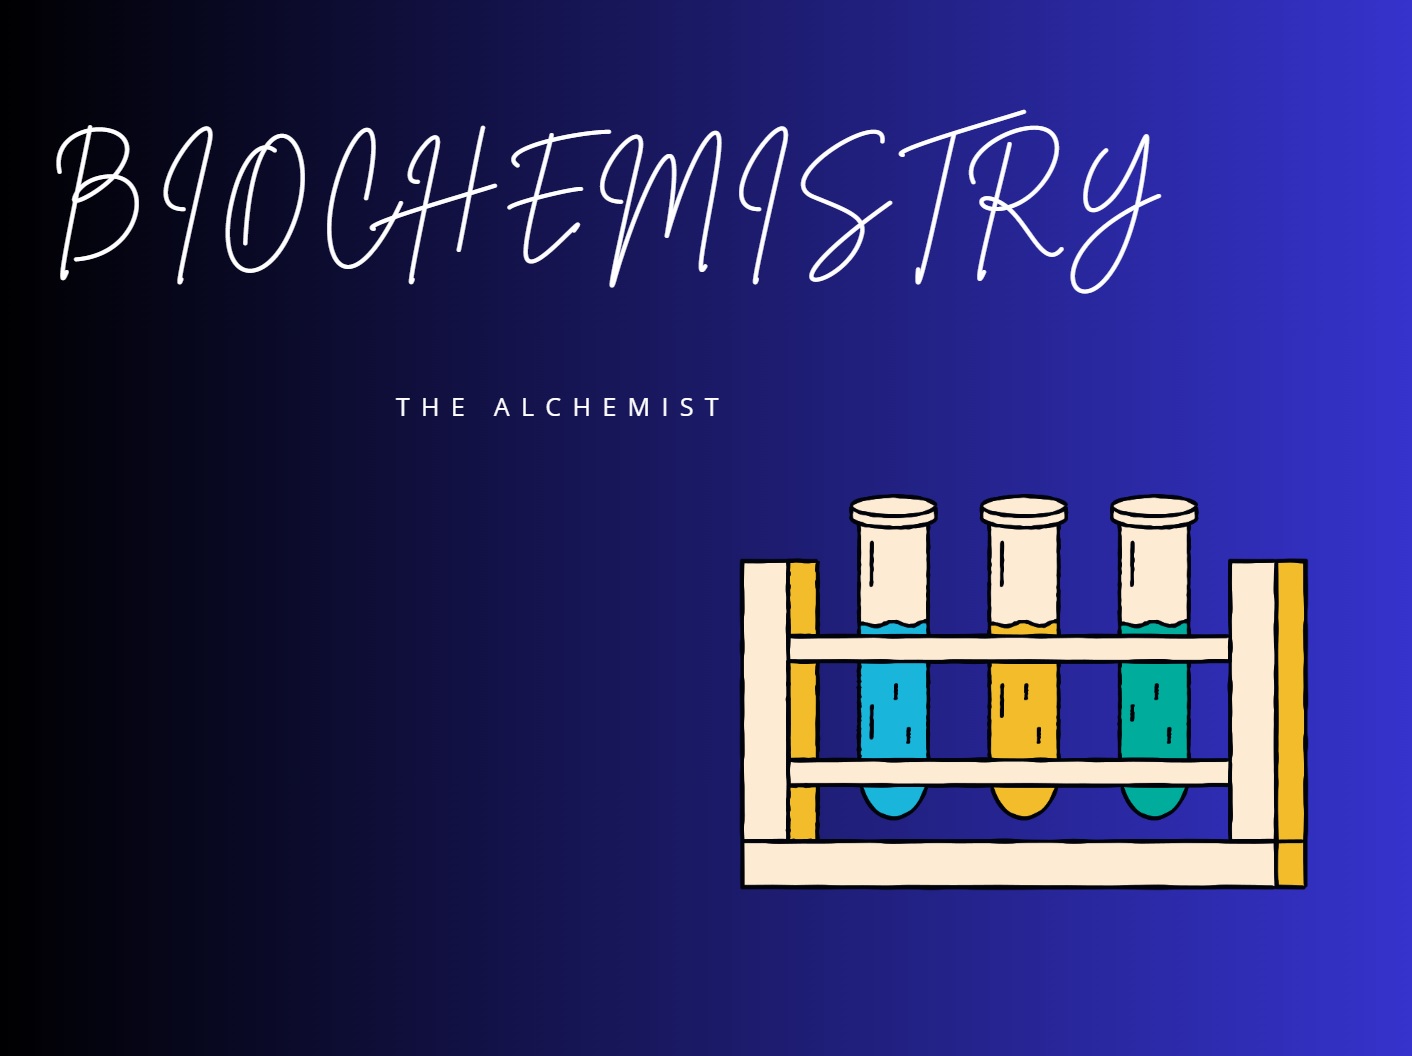 md biochemistry thesis topics